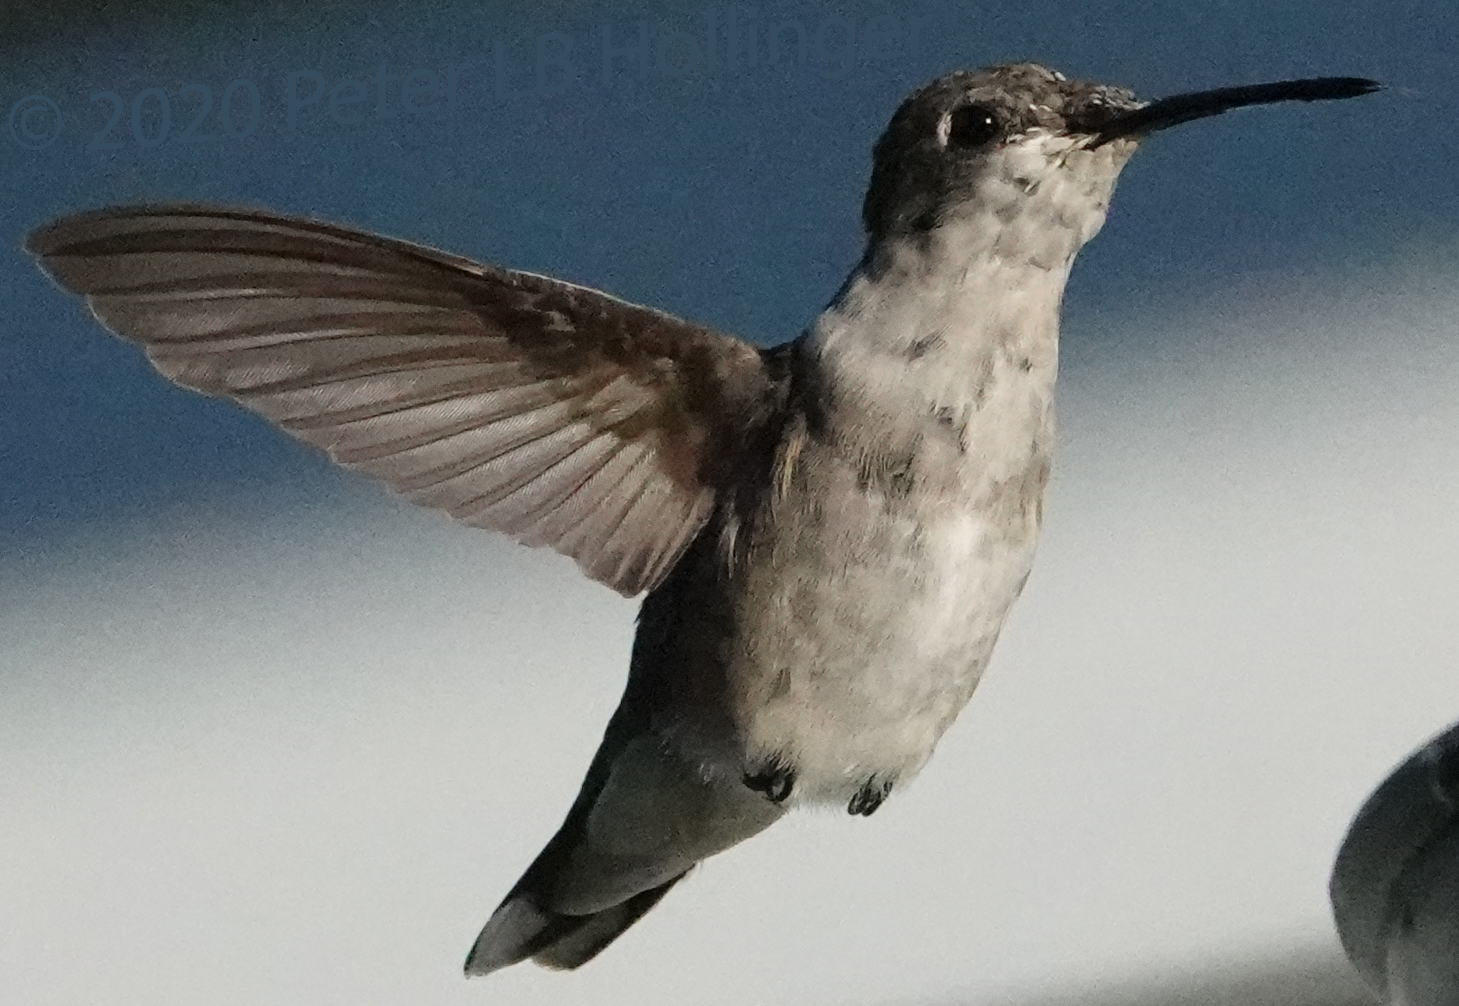 Hummingbird @ 1/32000 sec showing barbules